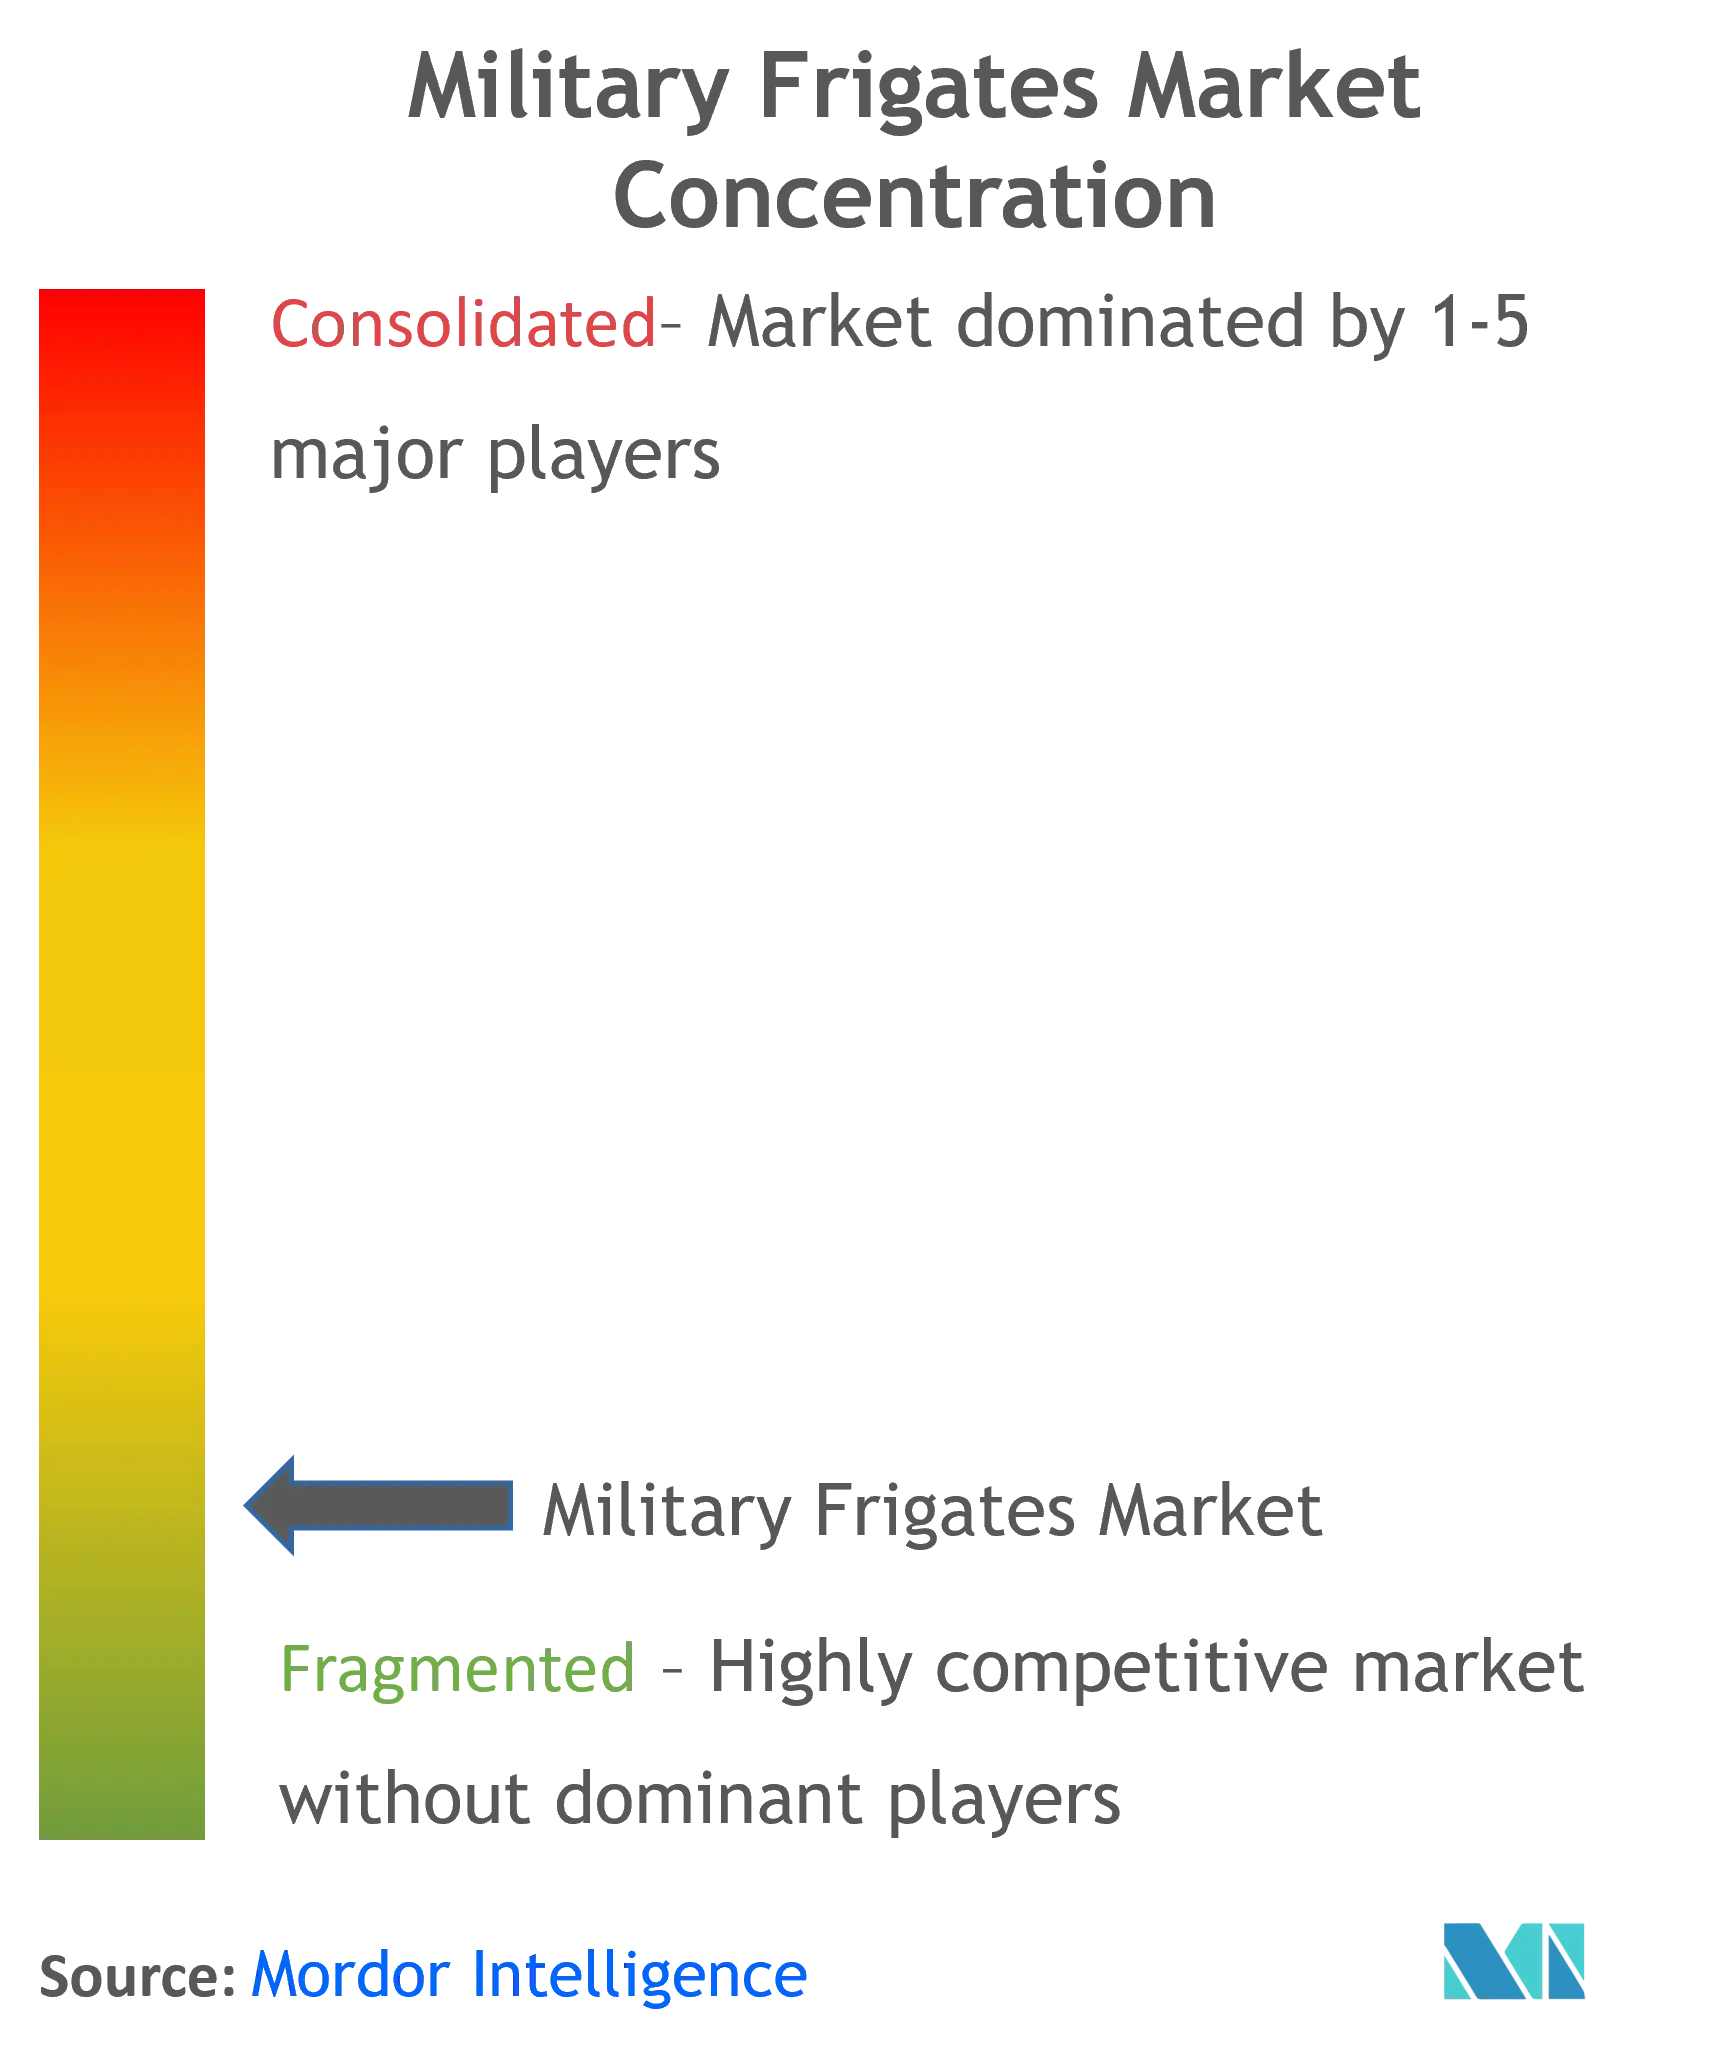 Military Frigates Market Concentration